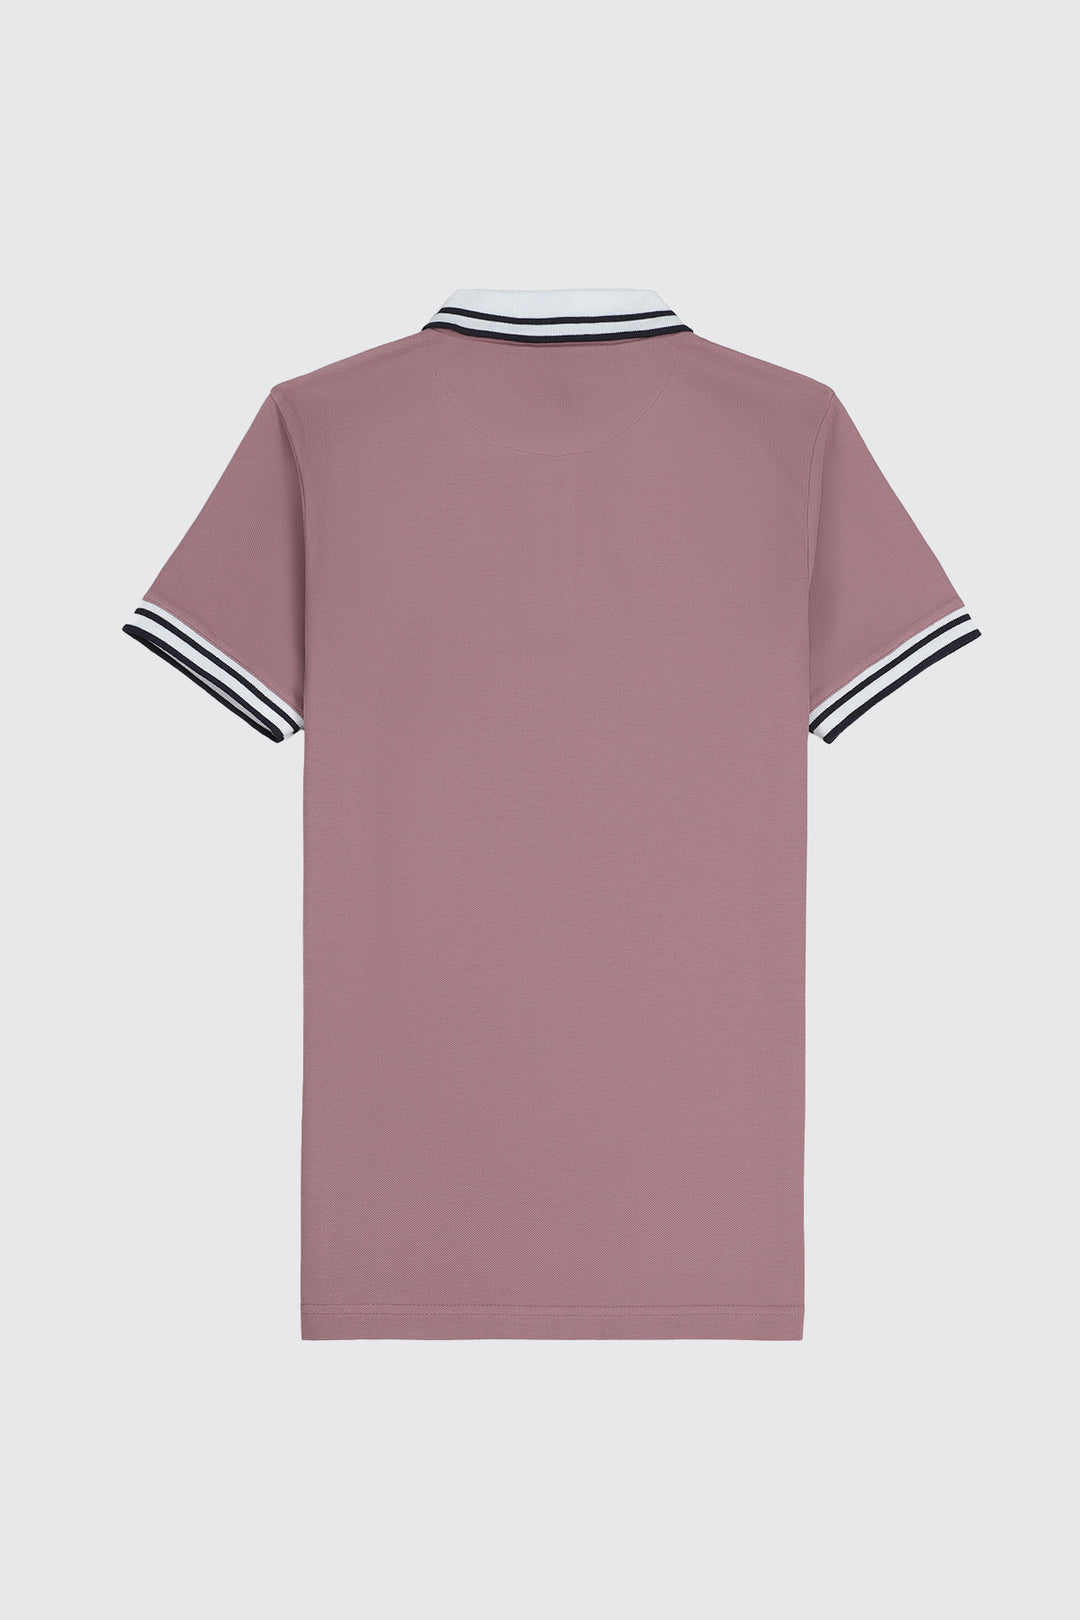 Rusty Pink Yarn Dyed Collar Polo Shirt - S23 - MP0225R